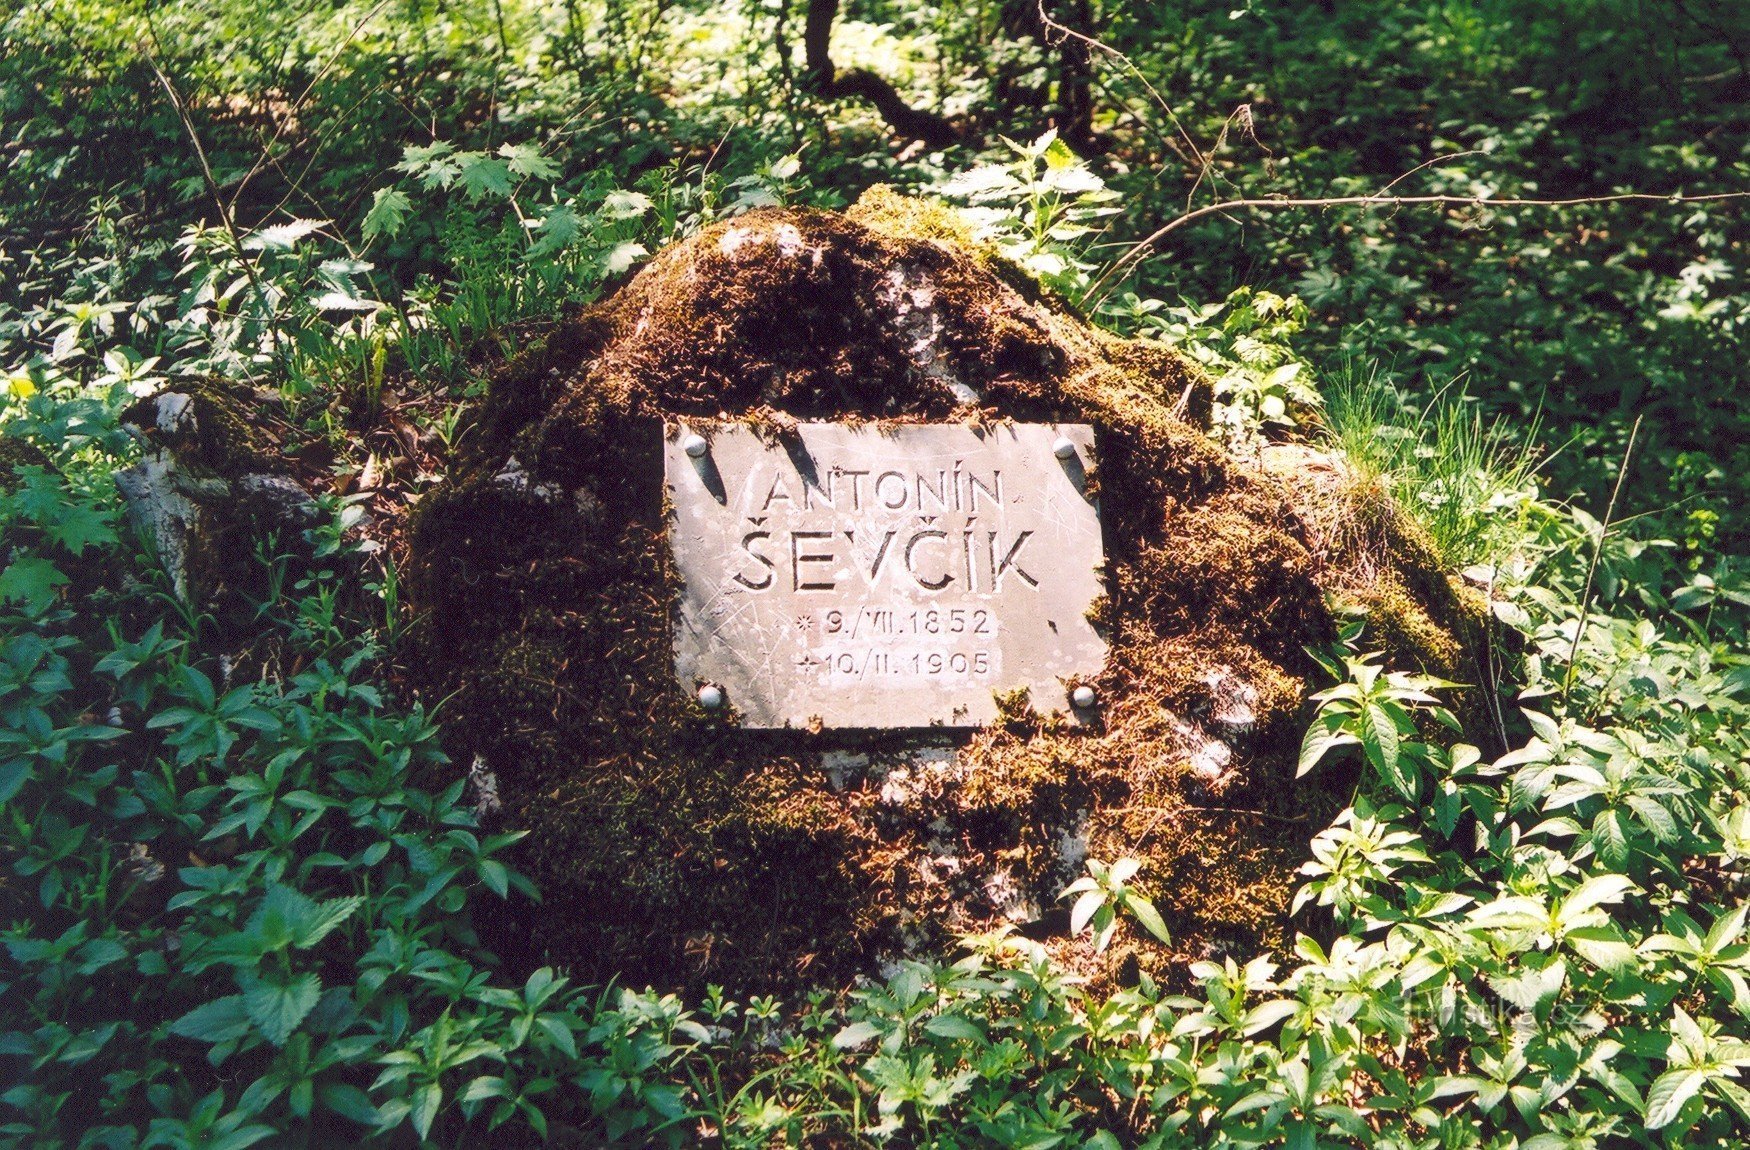 Ševčíks monument